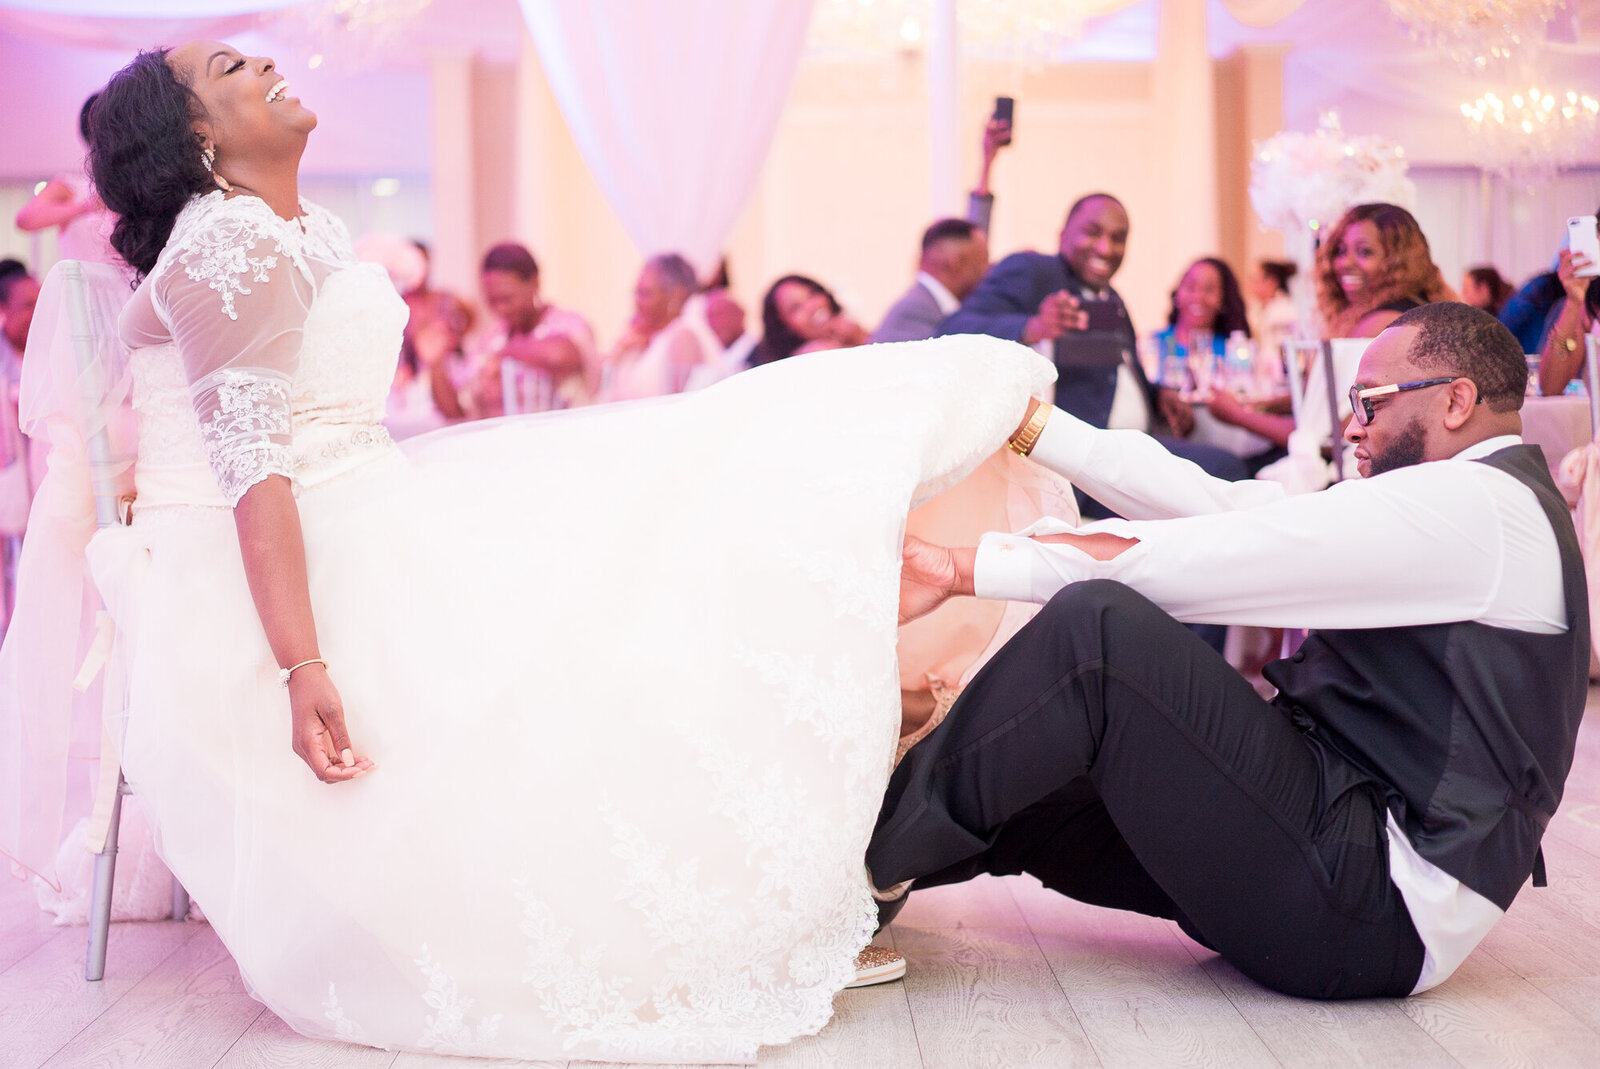 Crystal Ballroom Clearwater Wedding - Miami Wedding Photography - Ashley Canay62